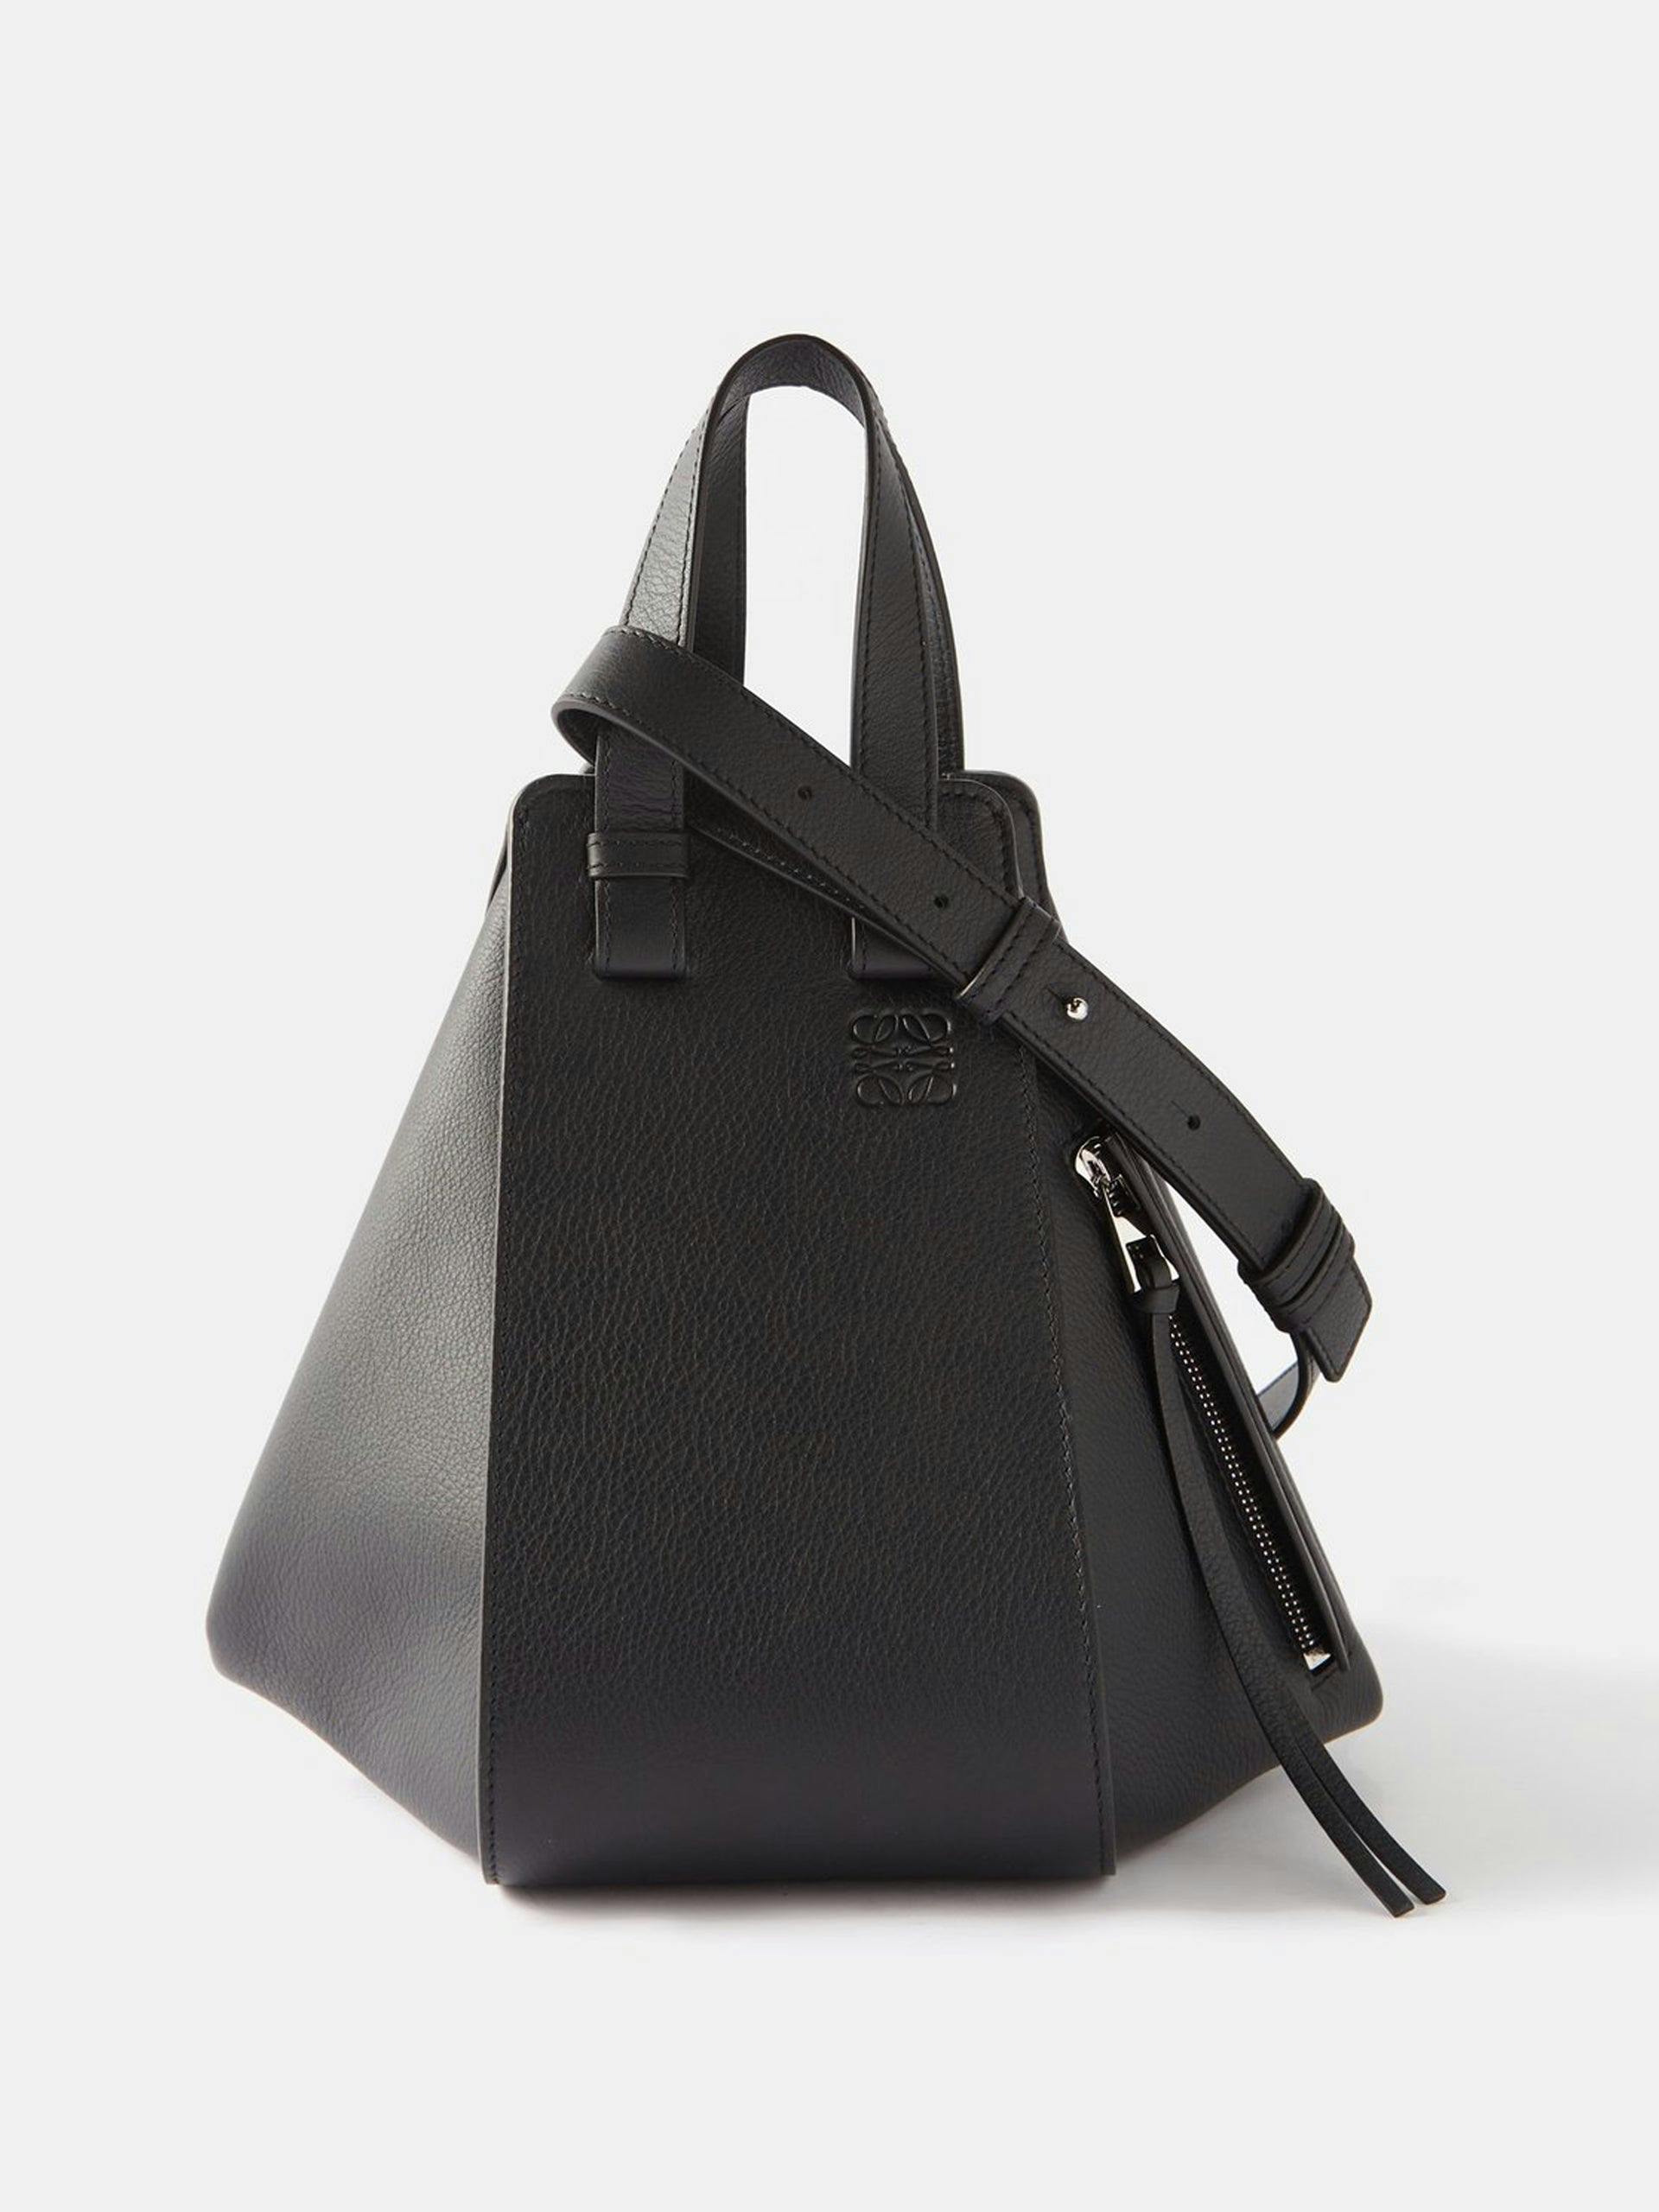 Black Hammock small leather handbag